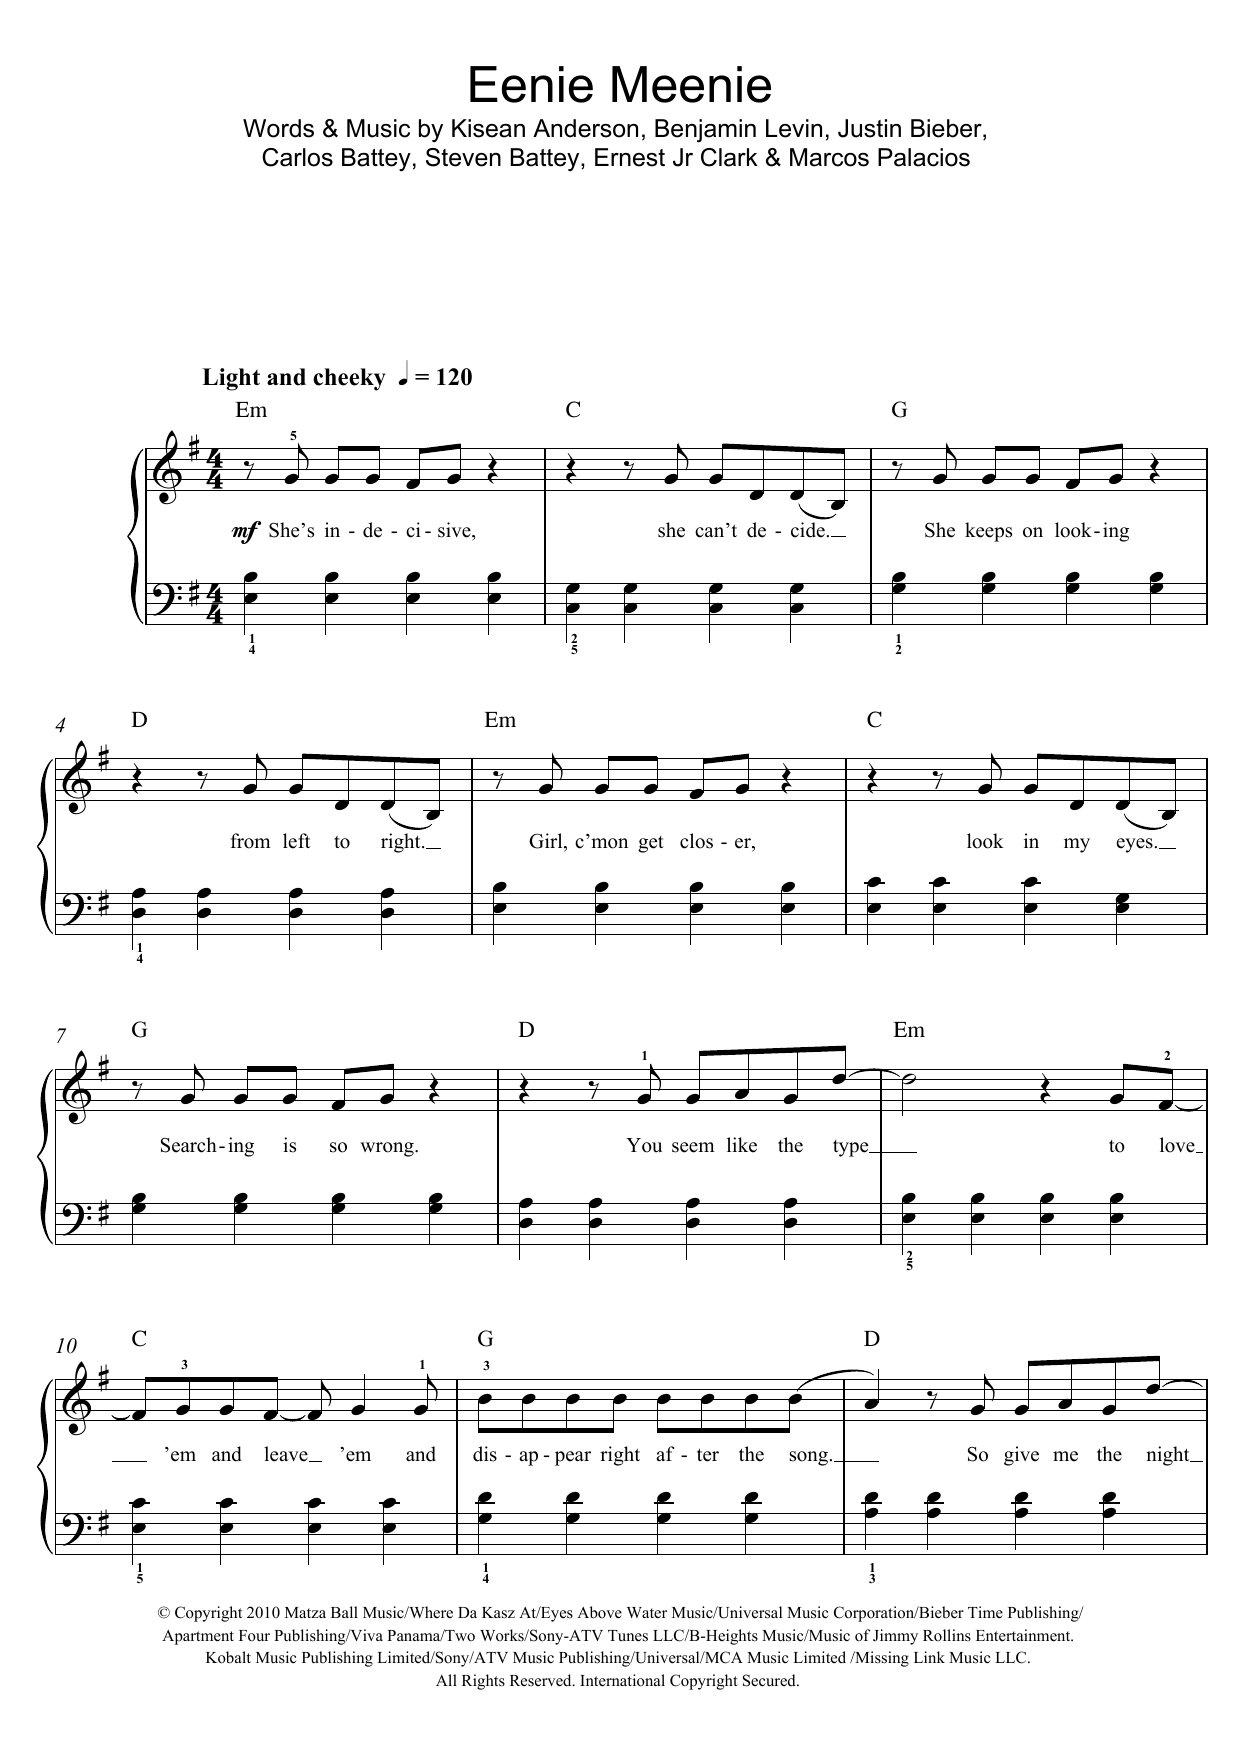 Download Sean Kingston & Justin Bieber Eenie Meenie Sheet Music and learn how to play Beginner Piano PDF digital score in minutes